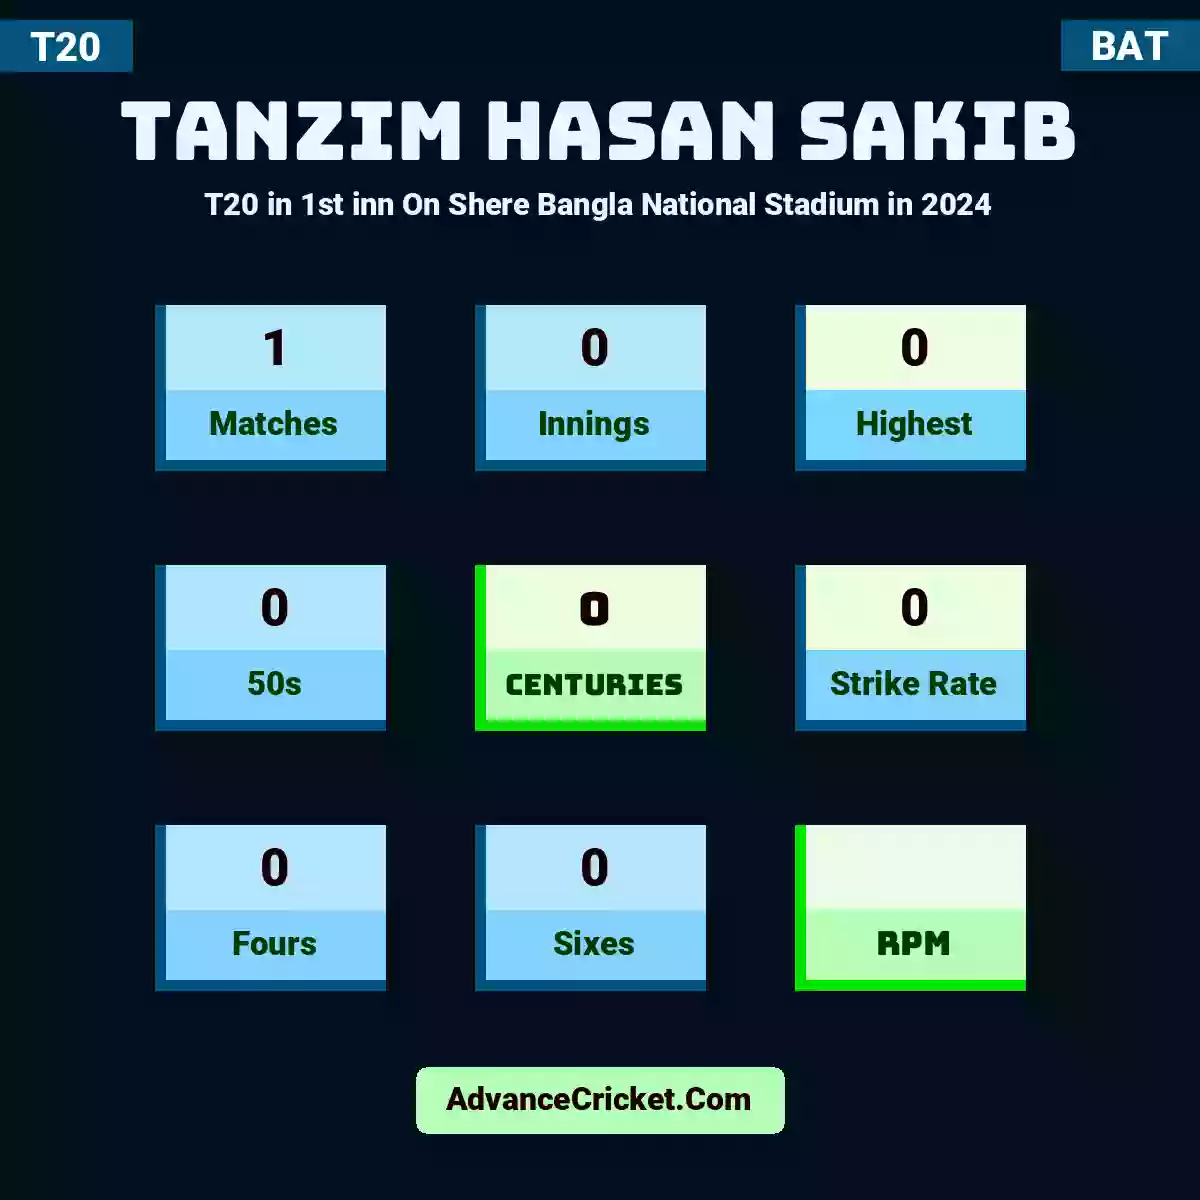 Tanzim Hasan Sakib T20  in 1st inn On Shere Bangla National Stadium in 2024, Tanzim Hasan Sakib played 1 matches, scored 0 runs as highest, 0 half-centuries, and 0 centuries, with a strike rate of 0. T.Sakib hit 0 fours and 0 sixes.